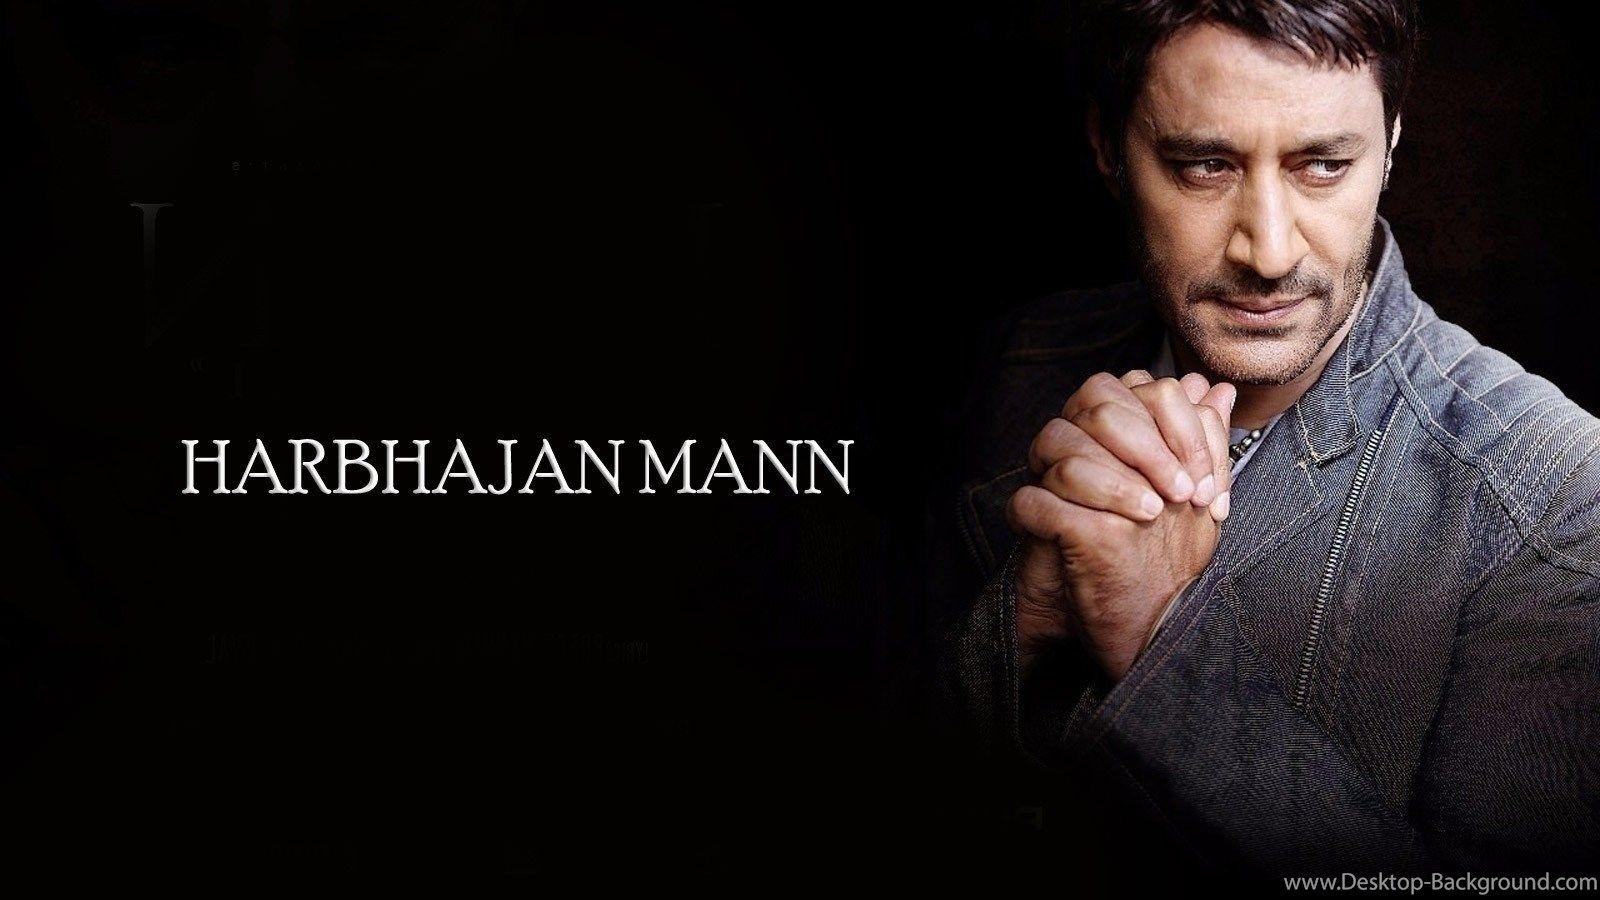 Harbhajan Mann 2015 Punjabi Singer Wallpaper Desktop Background